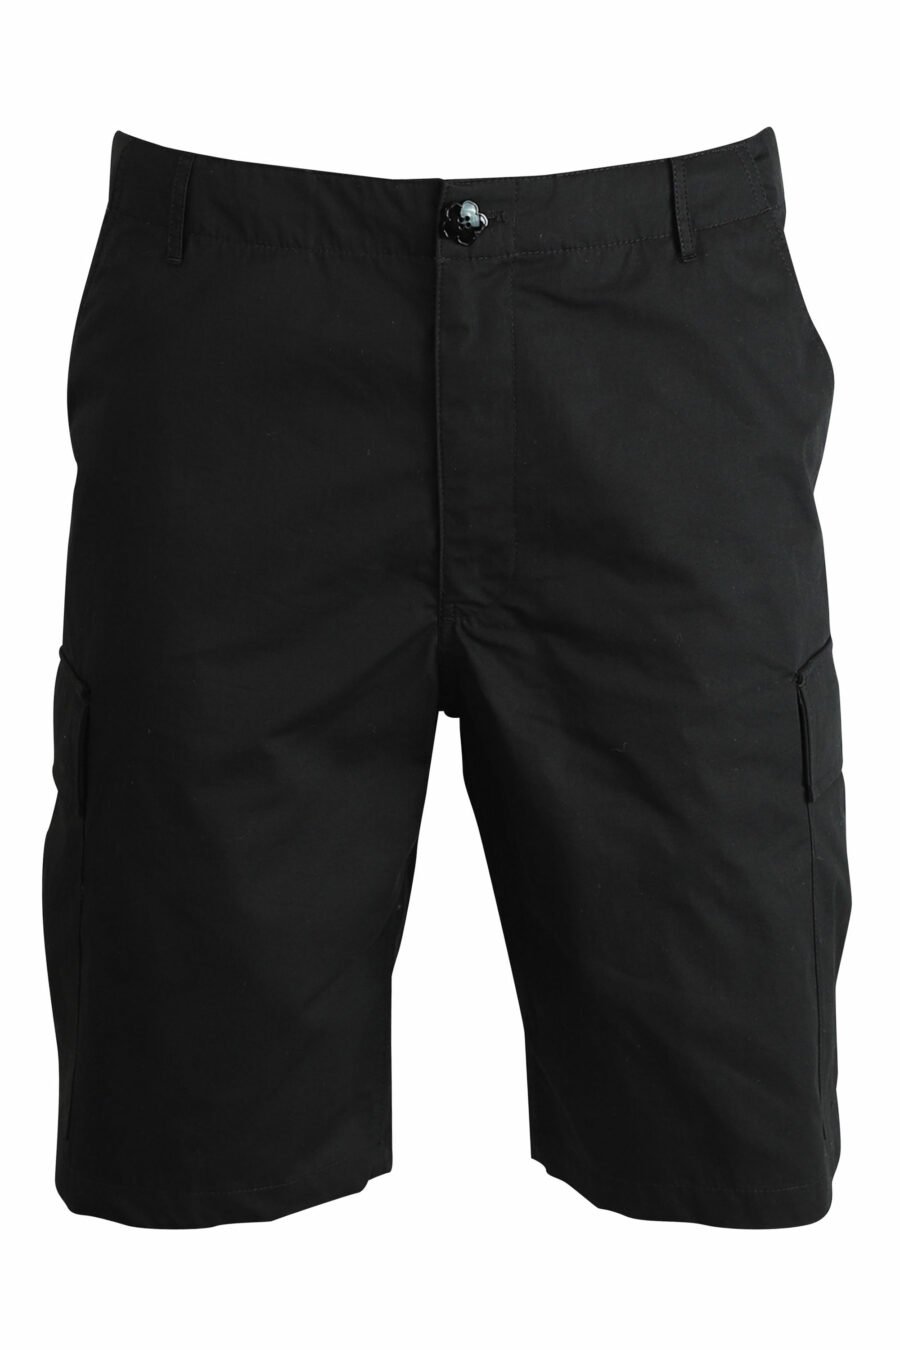 Pantalón negro corto estilo cargo - 3612230420502